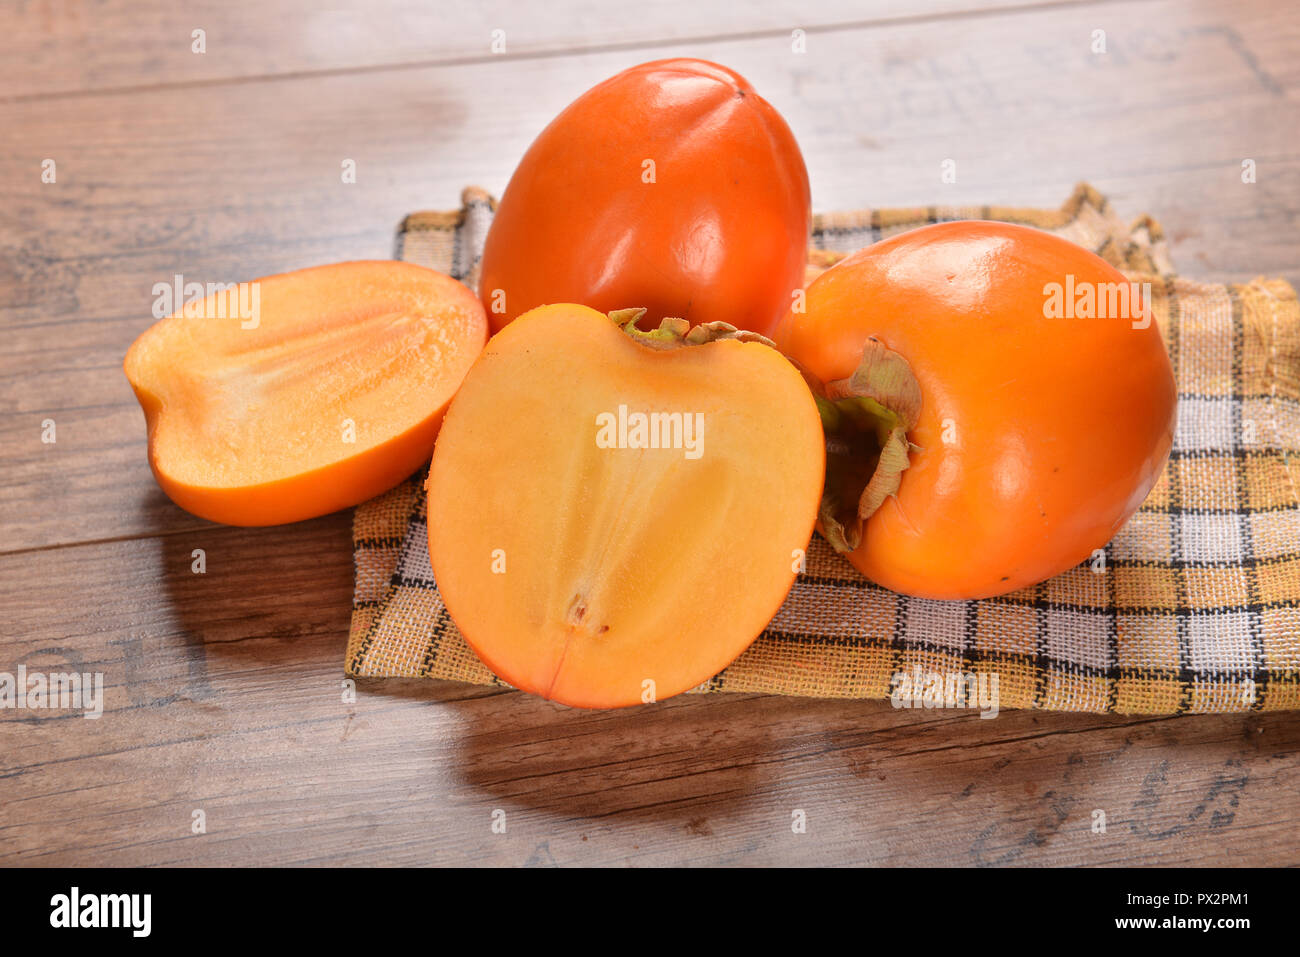 kaki fruits on wooden background Stock Photo